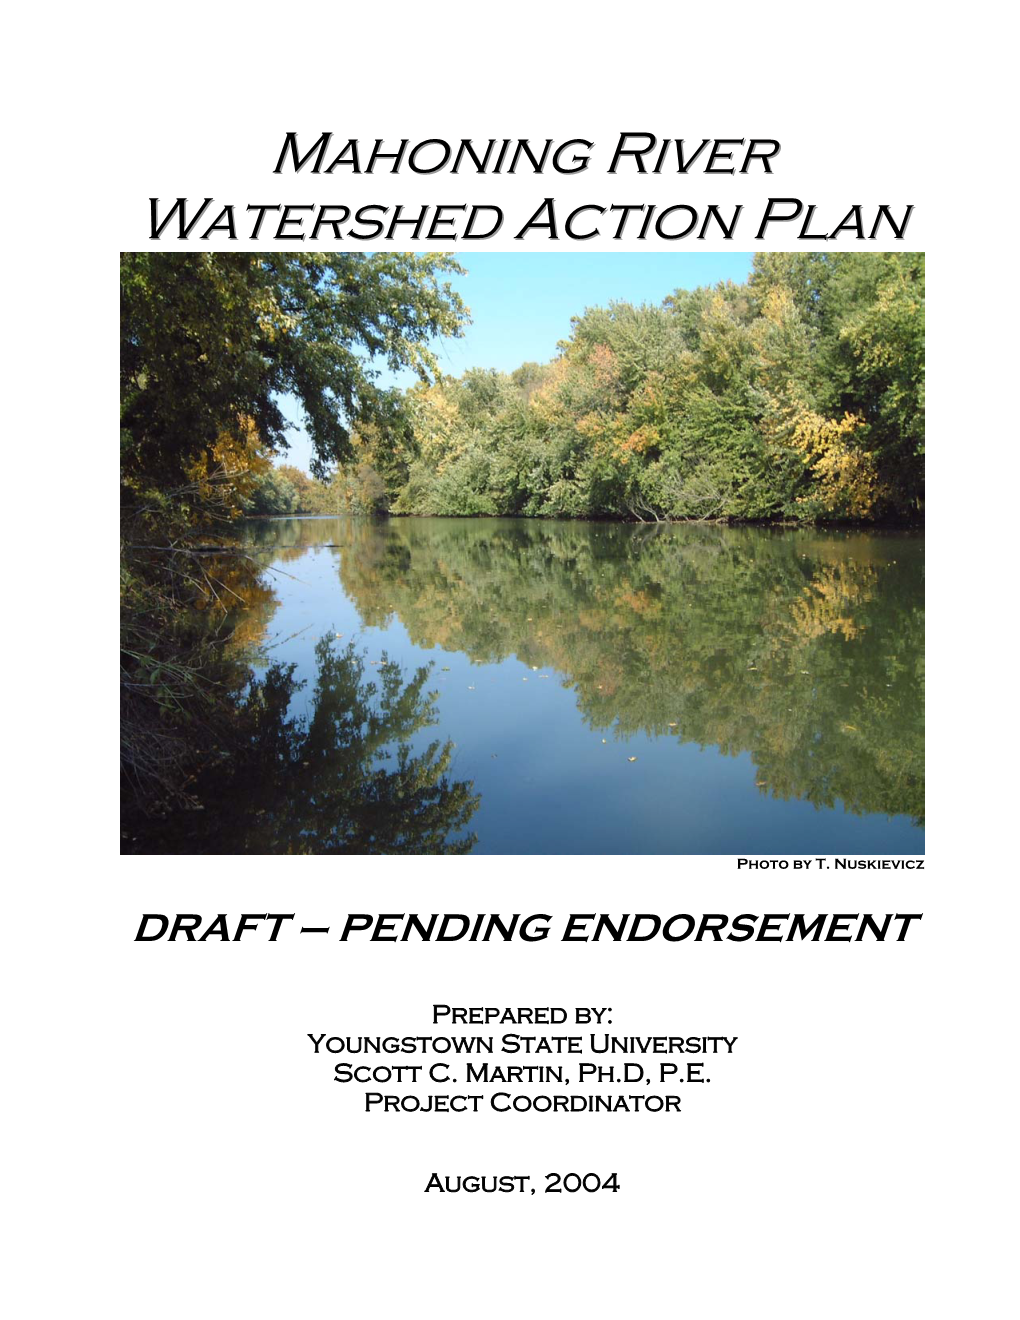 Mahoning River Watershed Action Plan